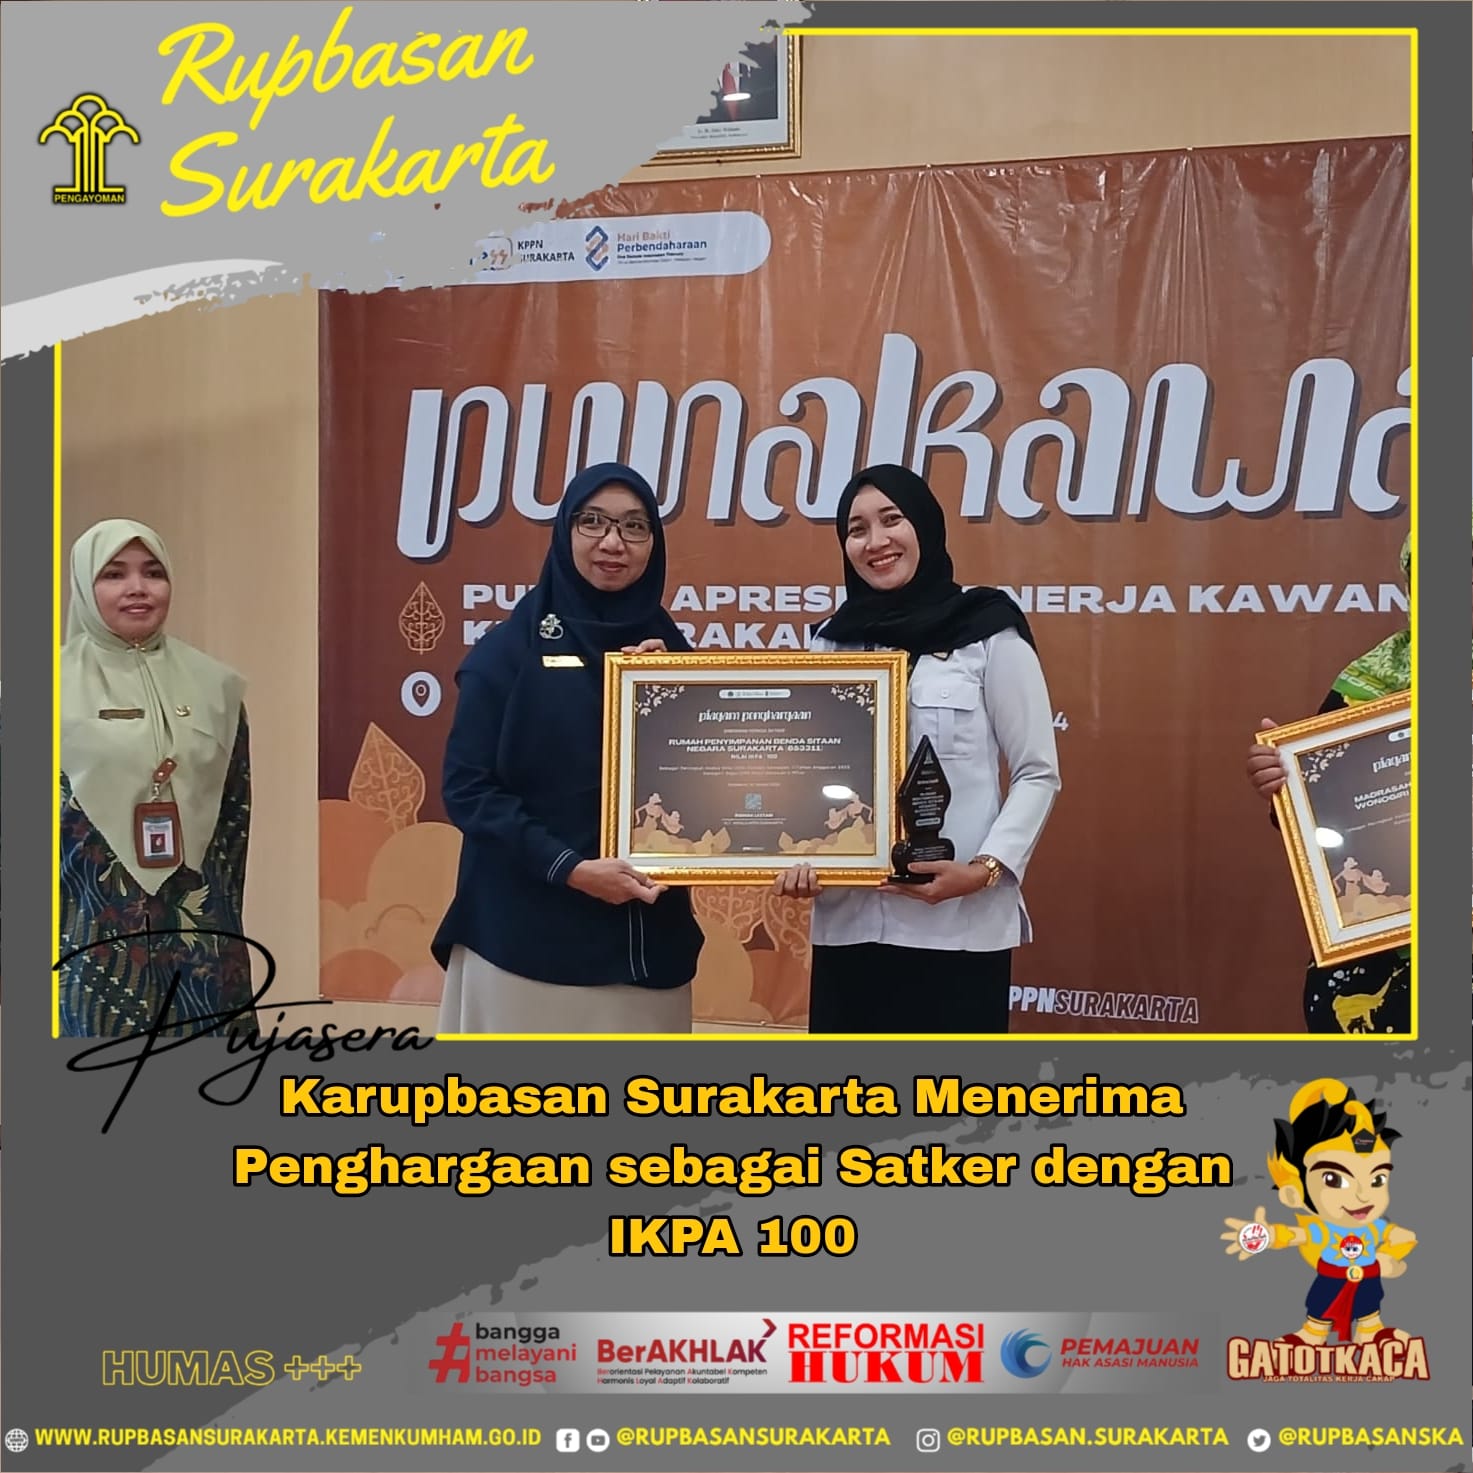 Kinerja Keuangan Handal, Rupbasan Surakarta Borong 4 Penghargaan dari KPPN Surakarta